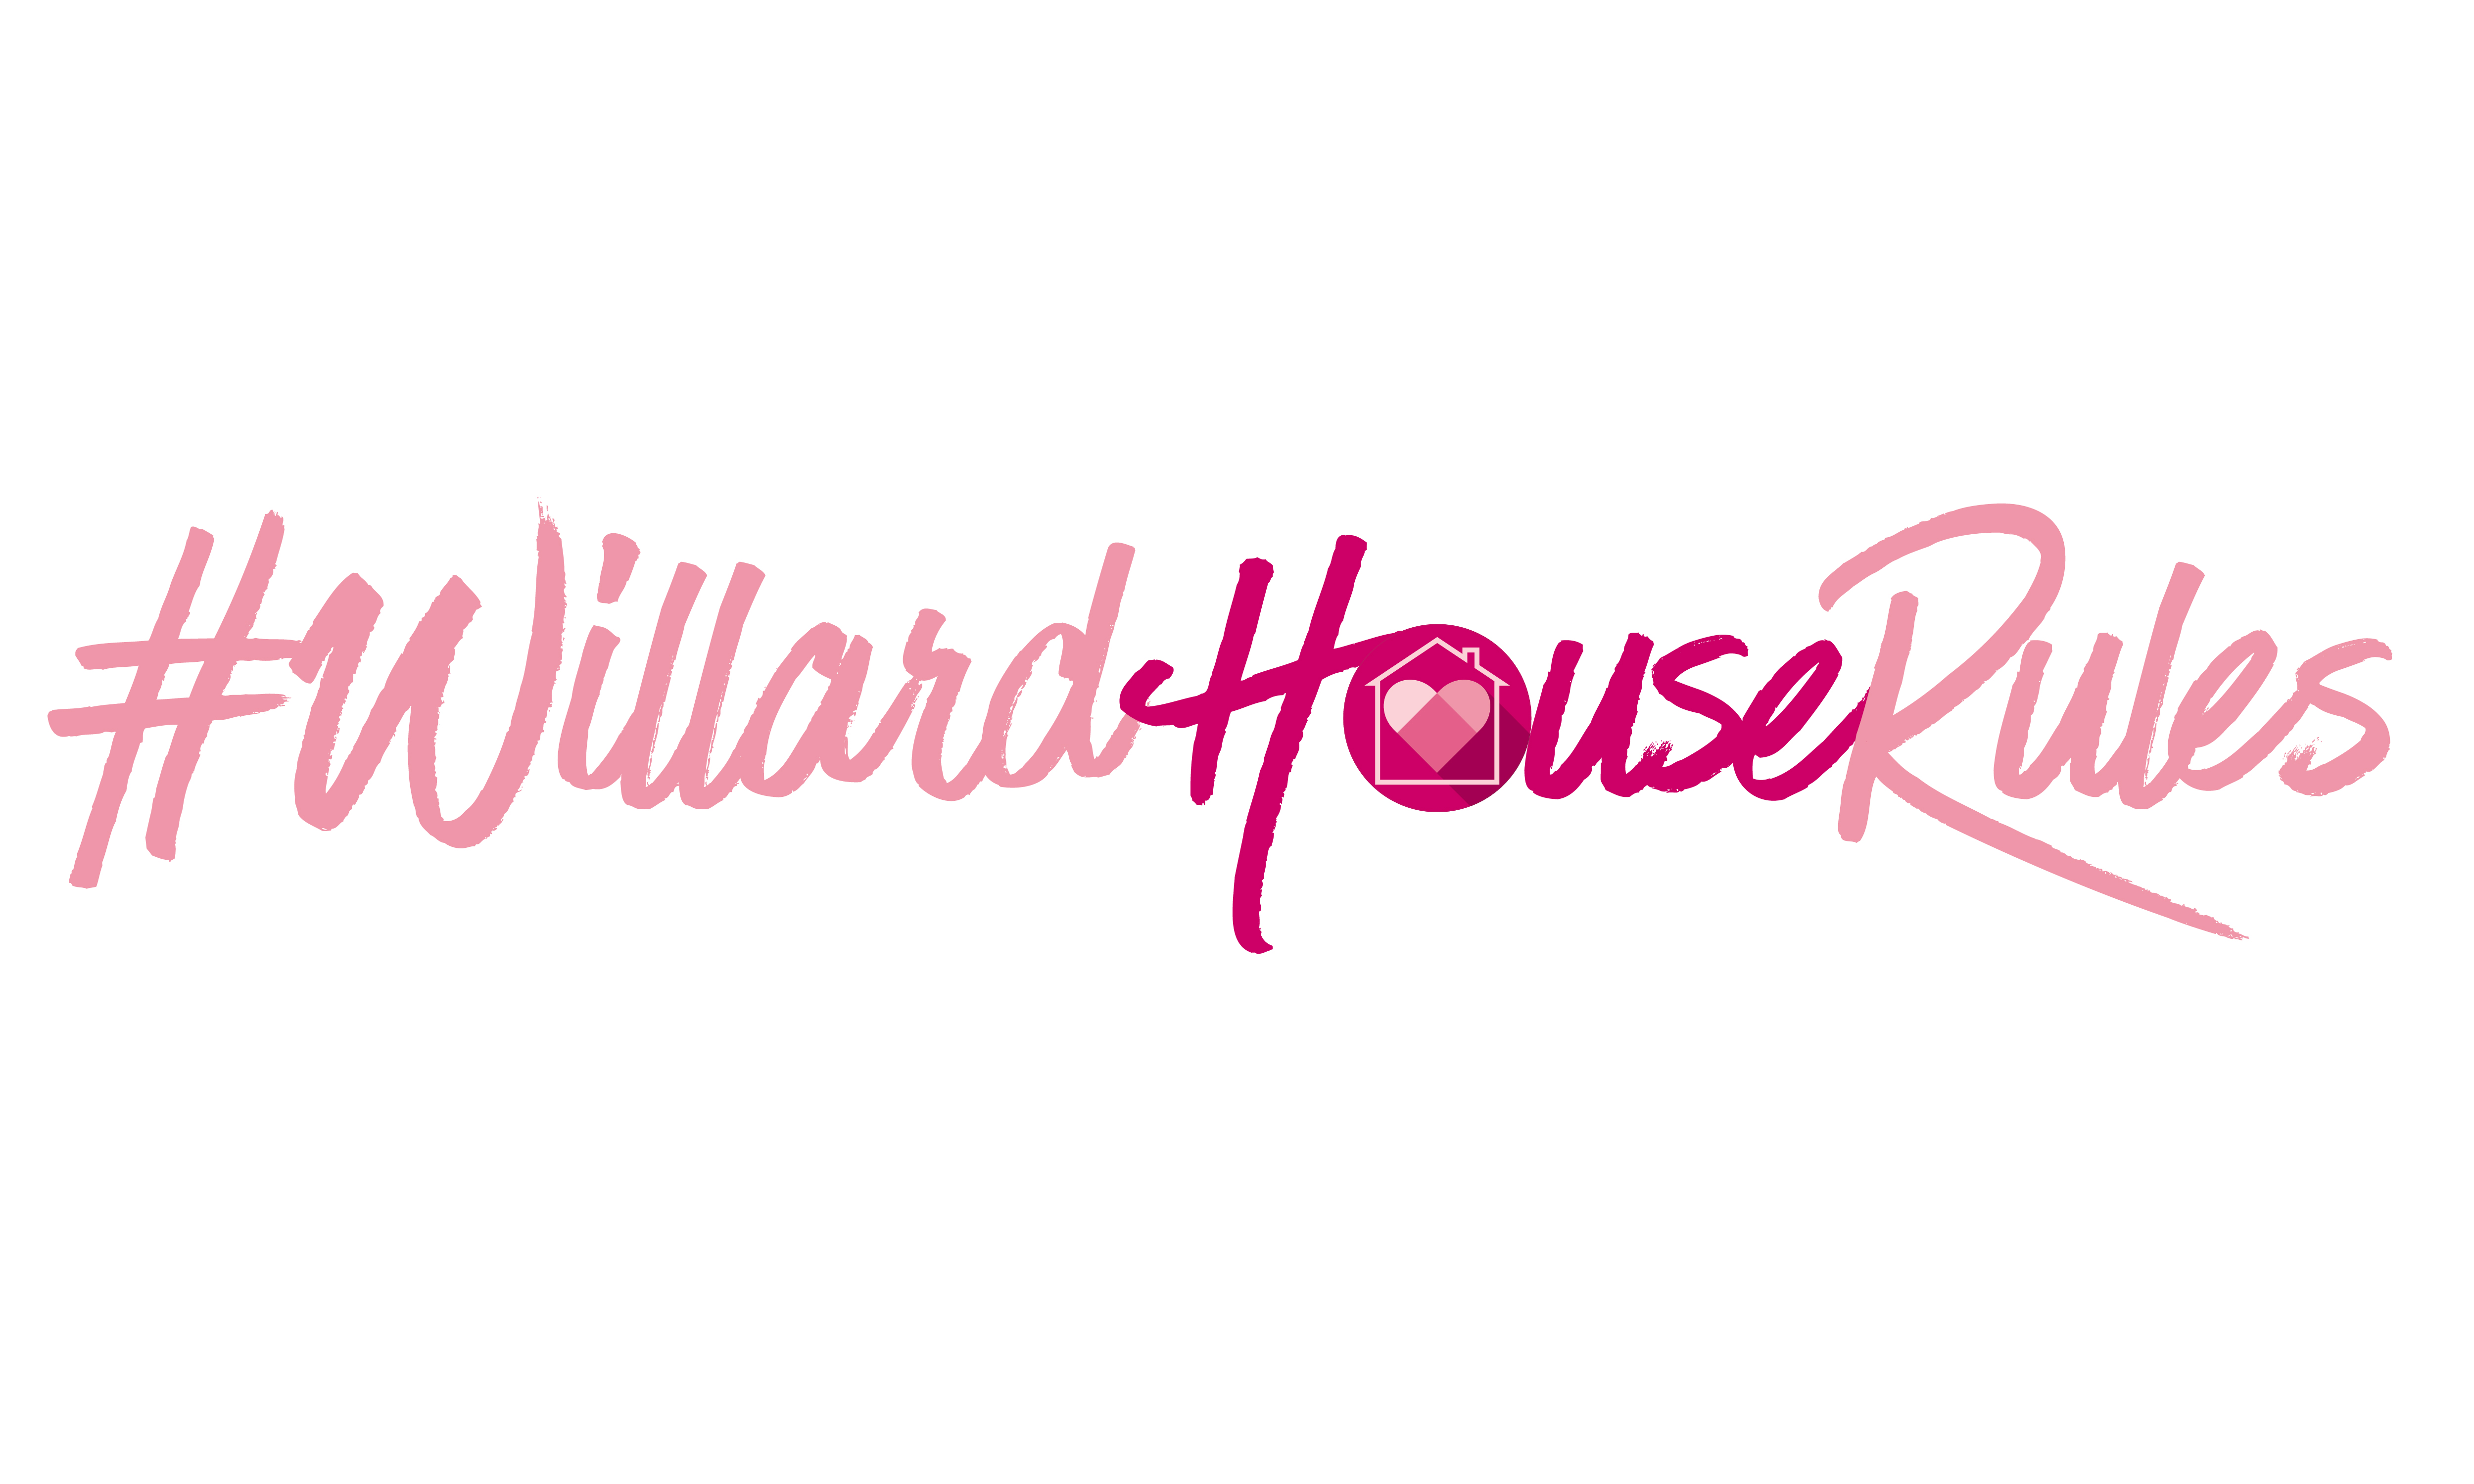 Willard House Rules